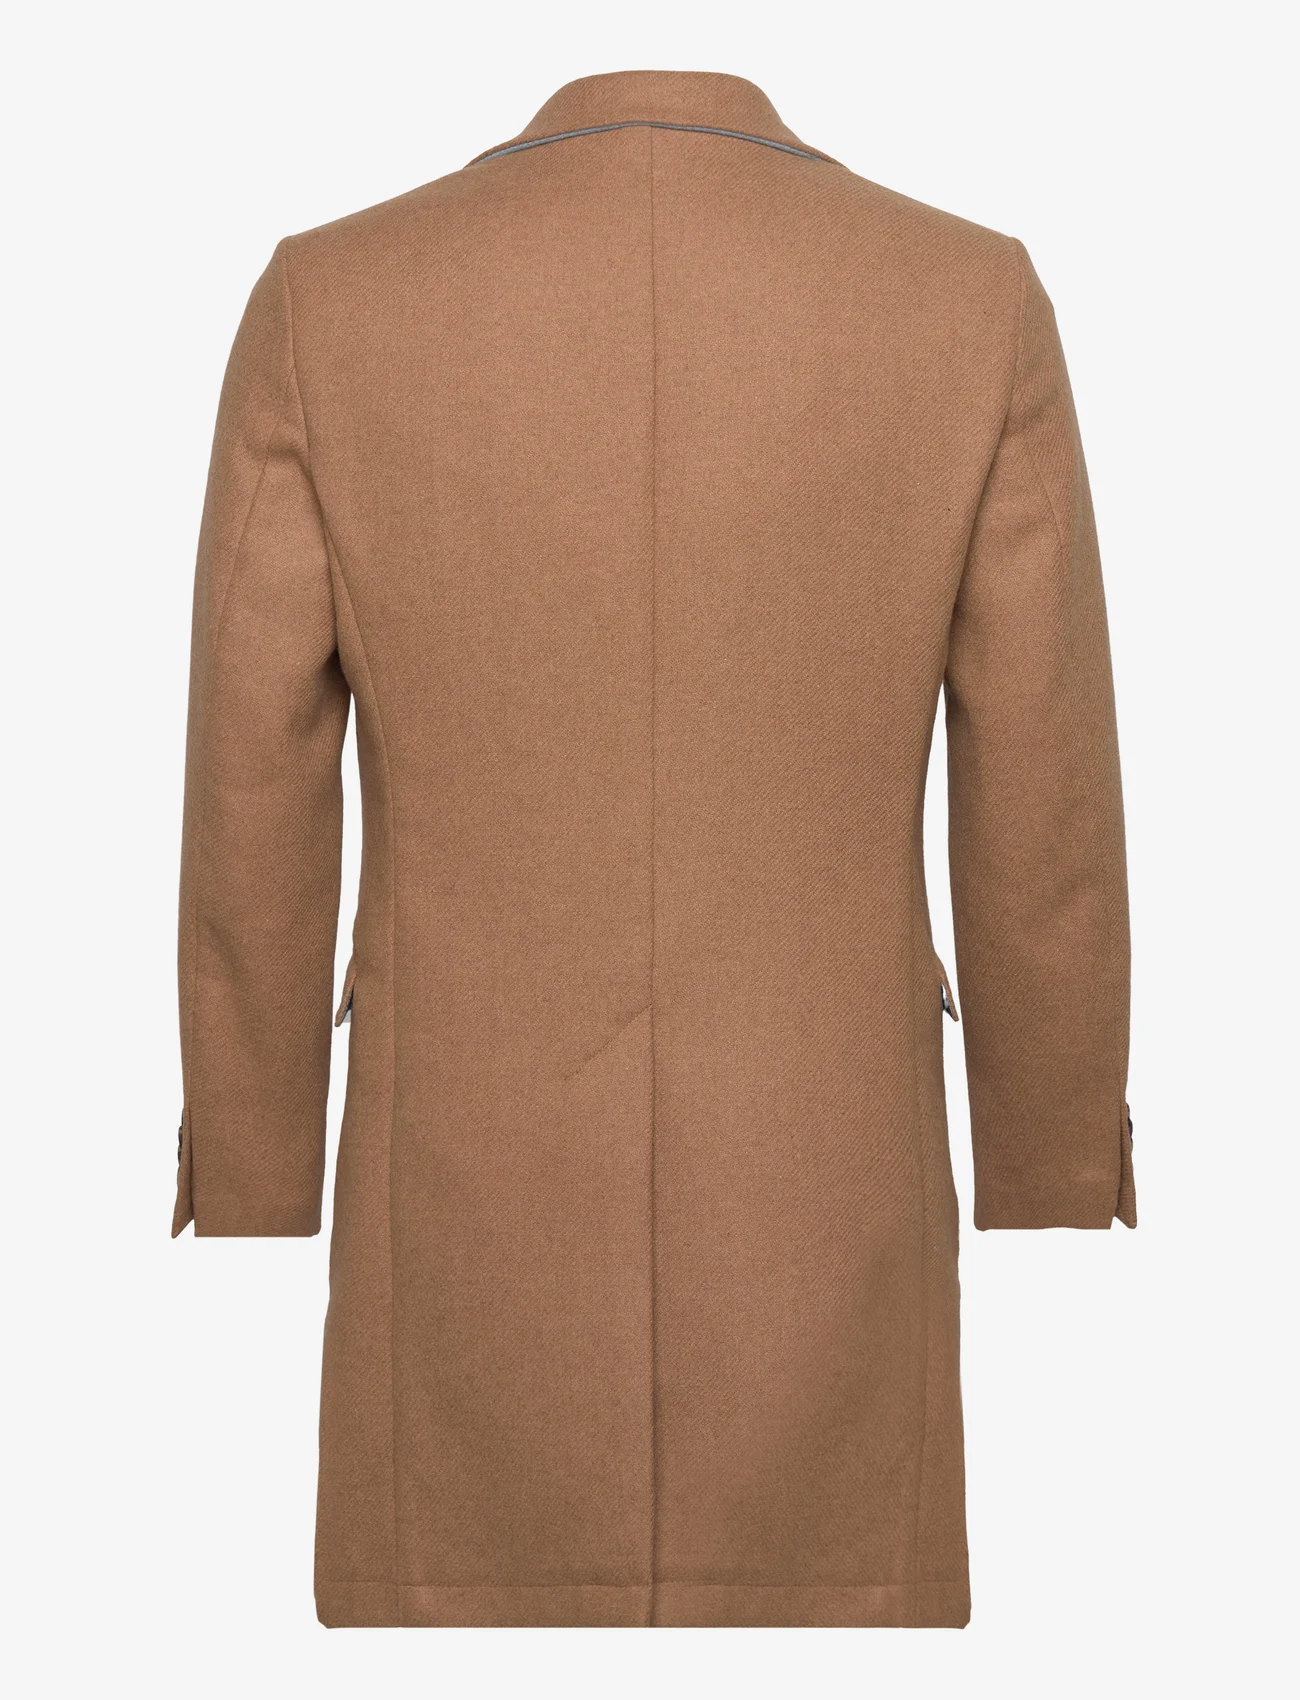 SIR of Sweden - Castor Coat - winter jackets - lt beige - 1